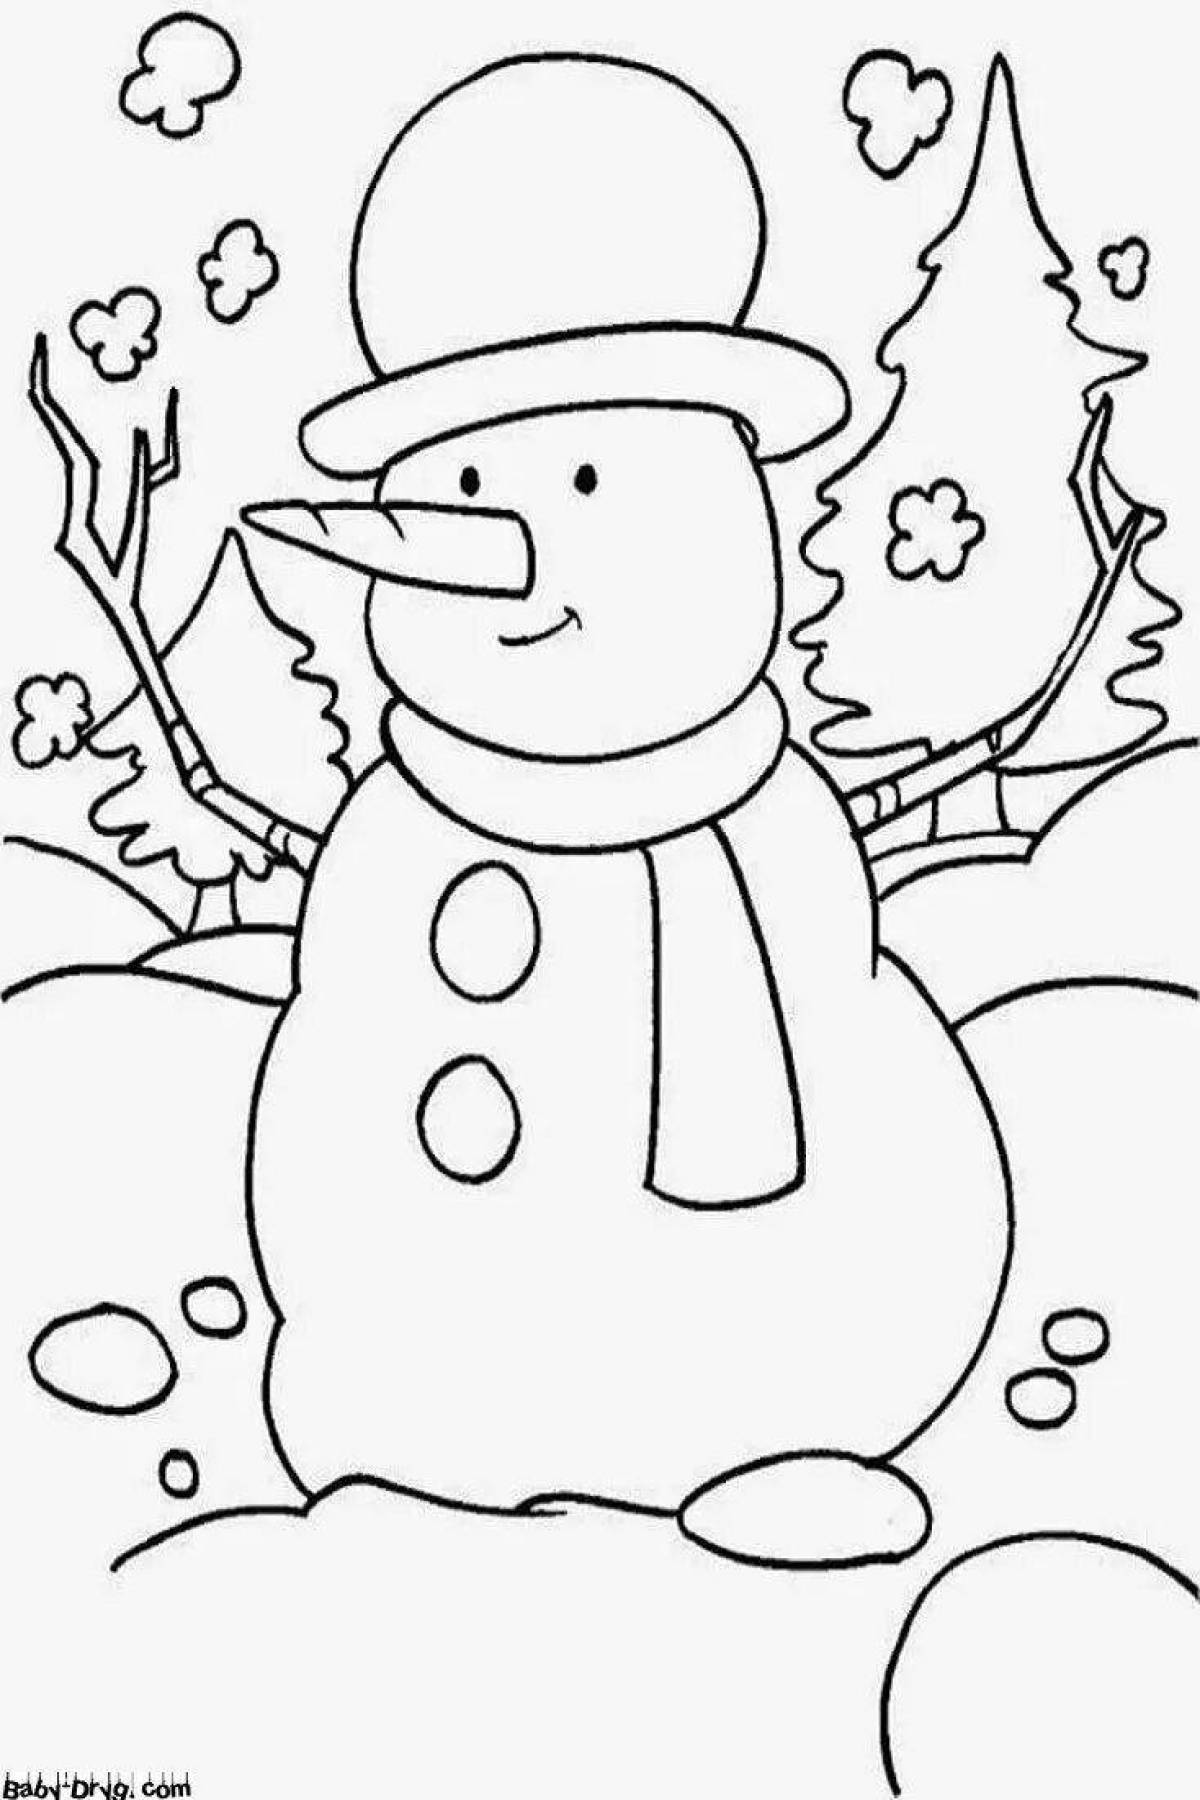 Humorous children's coloring book snowman